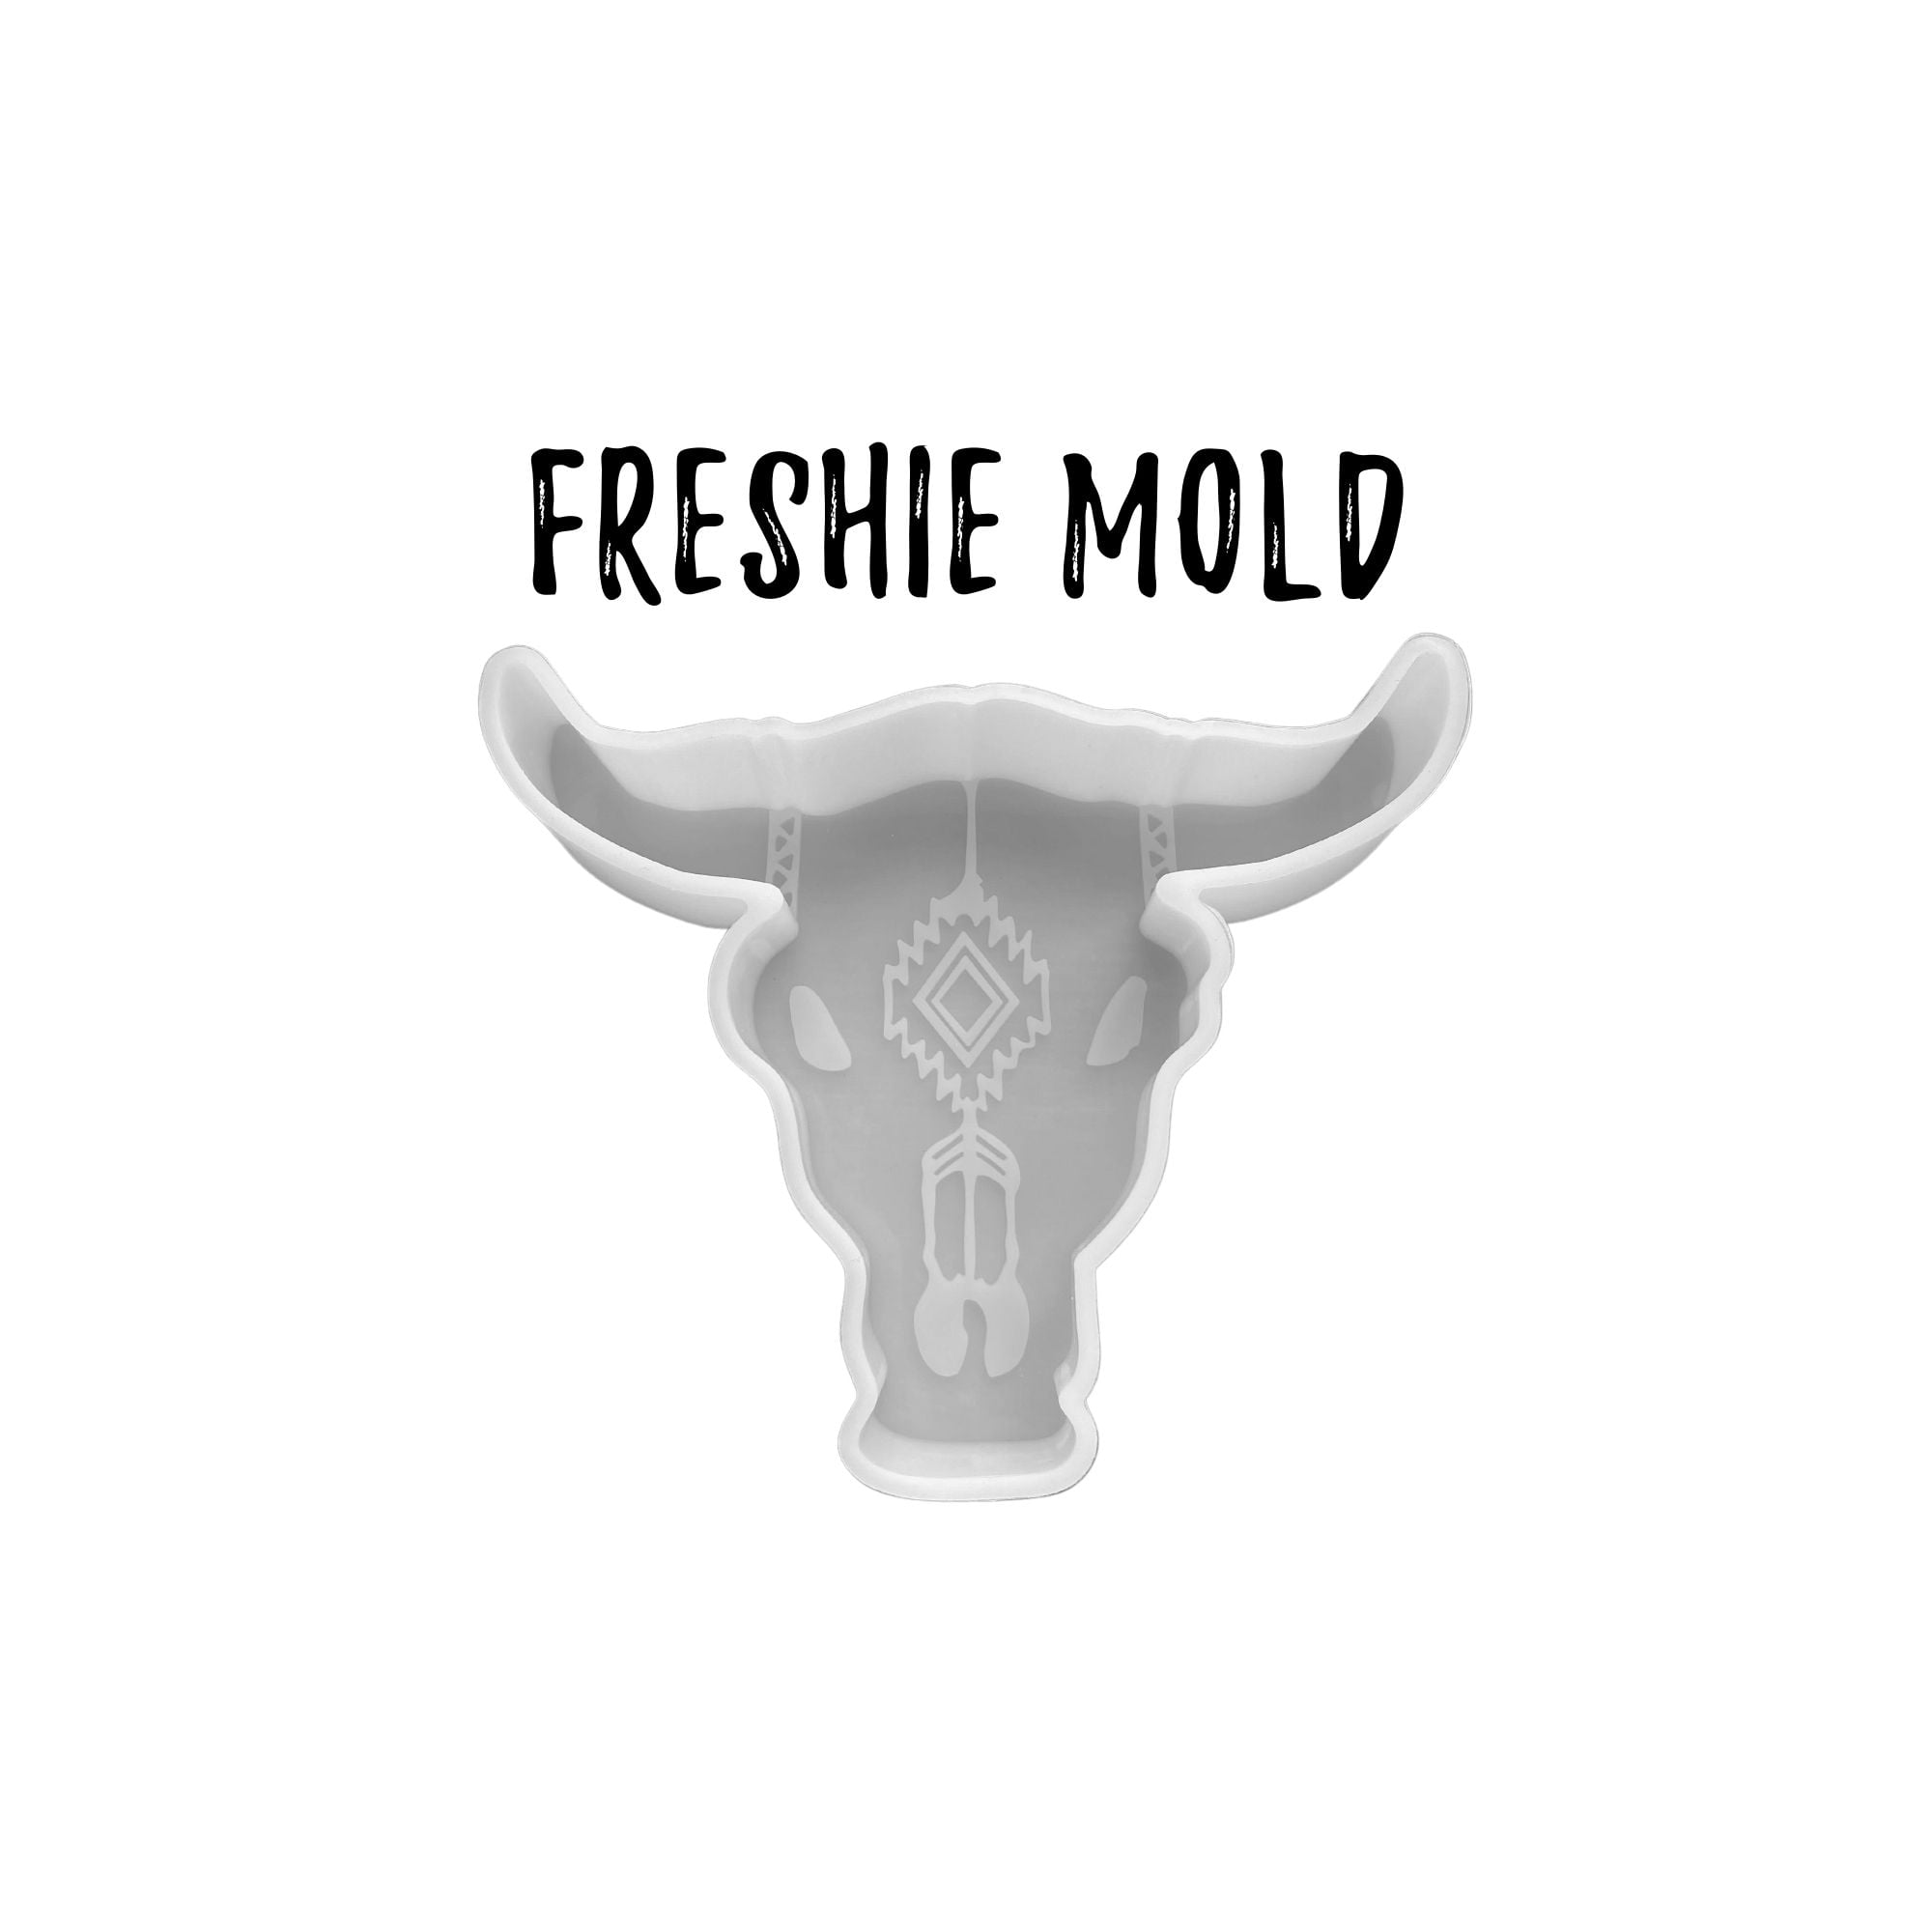 Lashicorn 6 Longhorn Freshie Mold Silicone Tray Bulk Wholesale | 11.25 Wide x 8 Long x 1 Deep | Multiple Mold for Freshies, Epoxy, Soap | Aztec Bull Skull